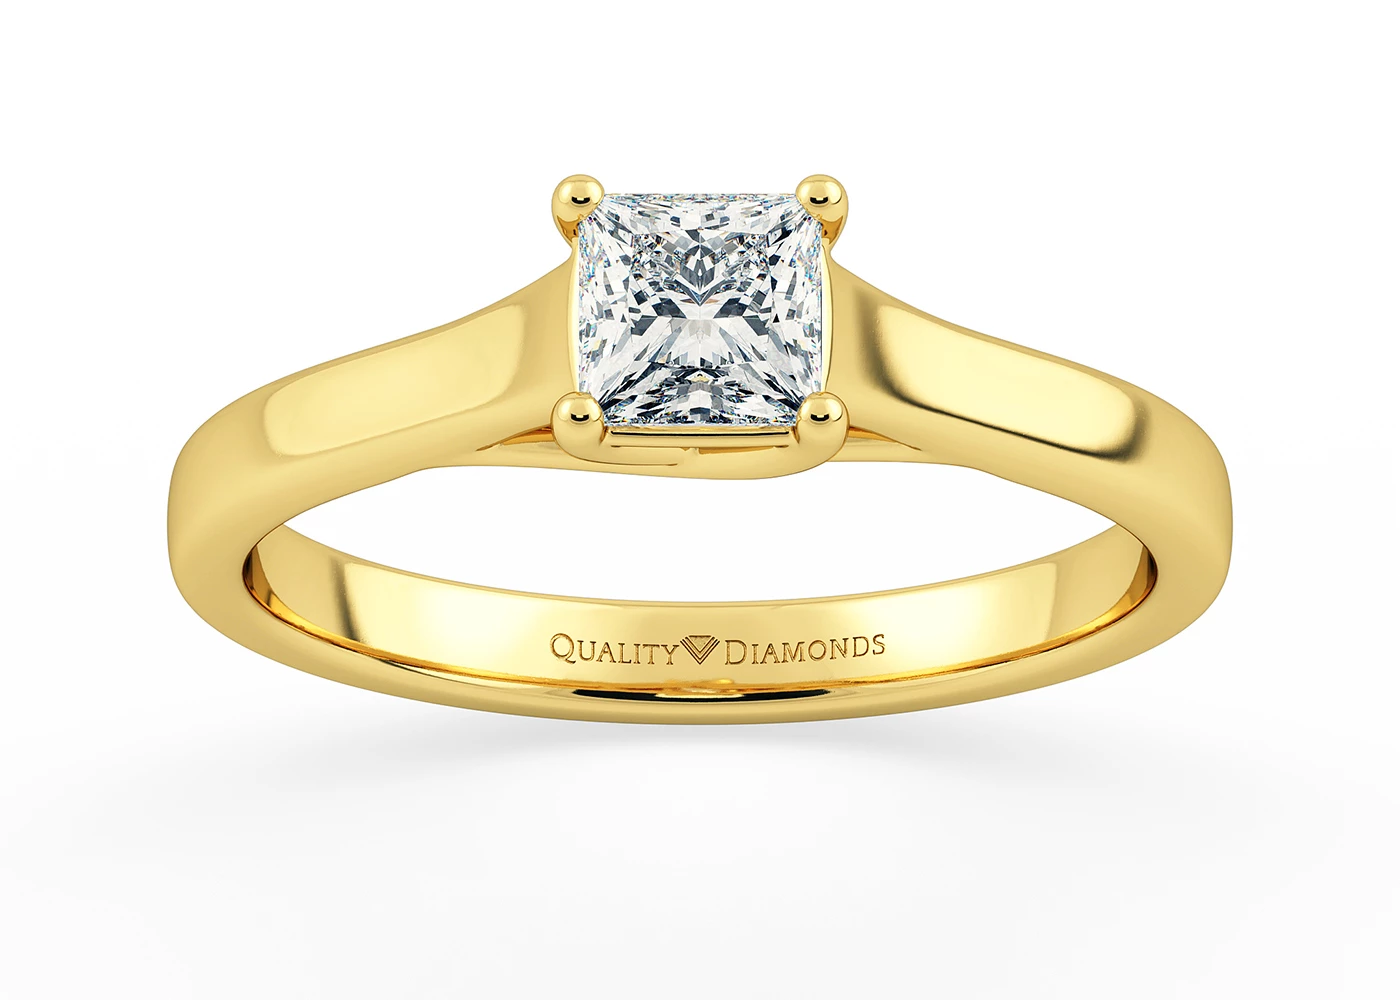 Princess Hita Diamond Ring in 9K Yellow Gold